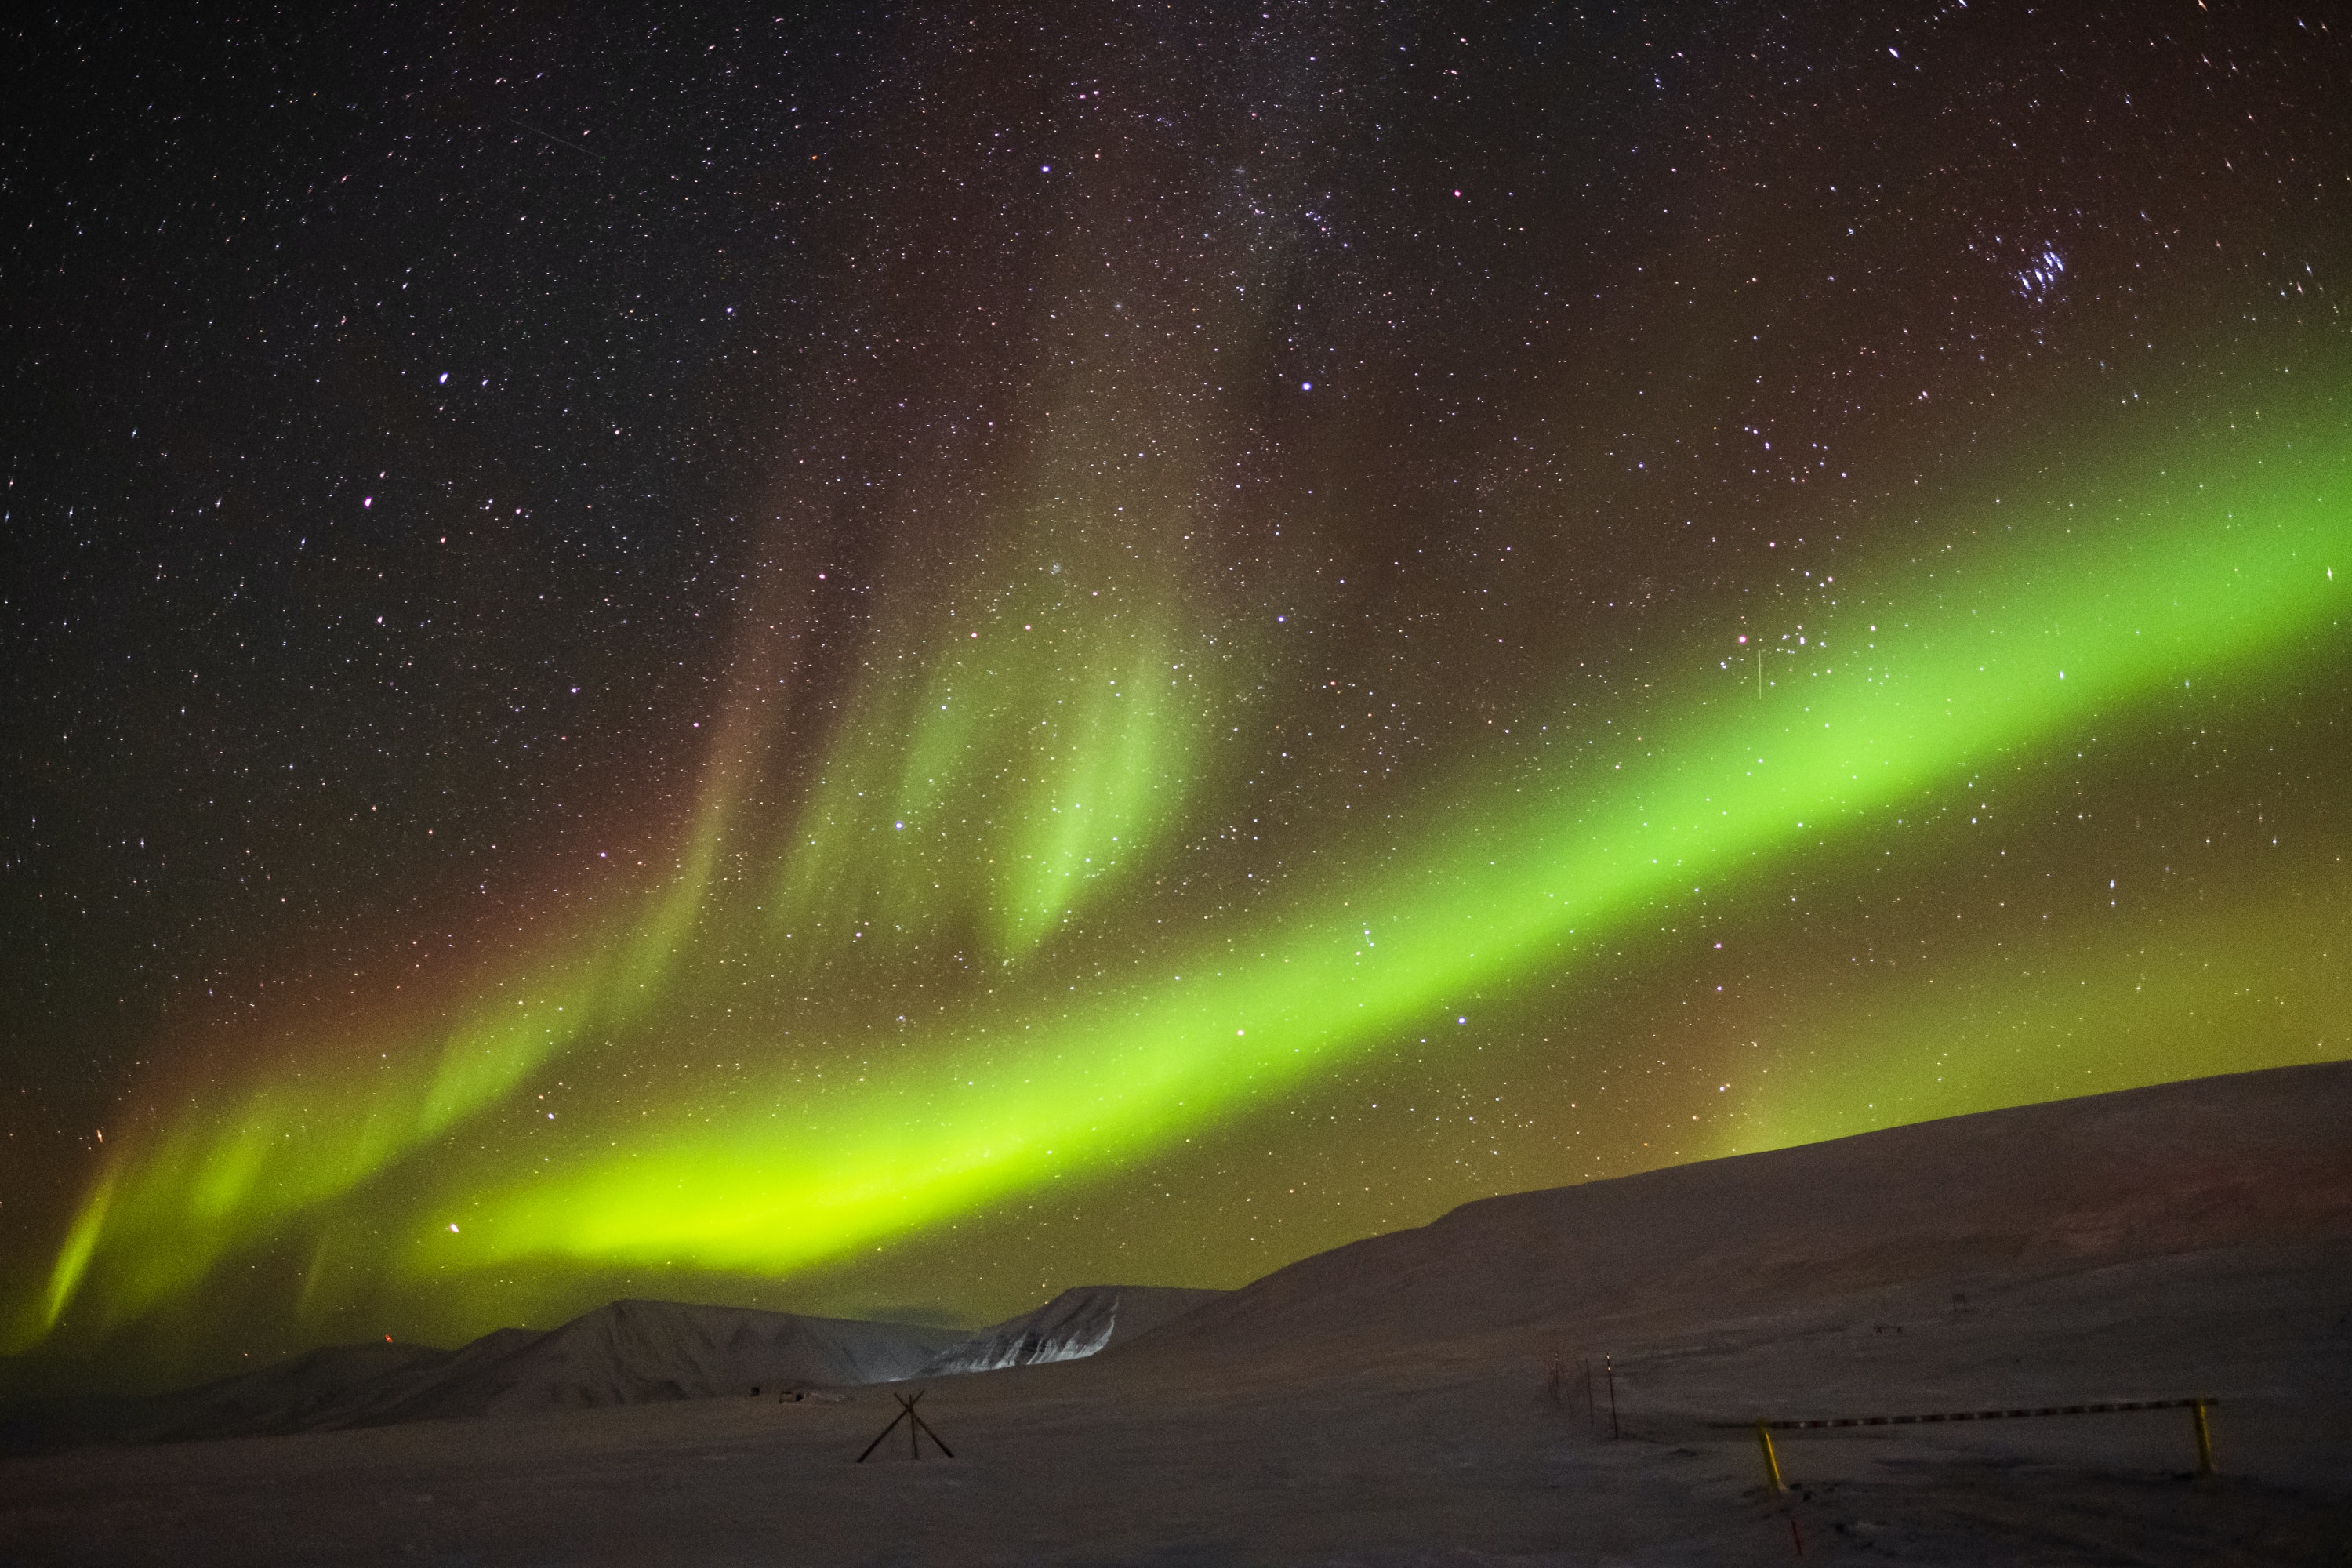 prowincja Svalbard, fot. Cezary Morga/Unsplash